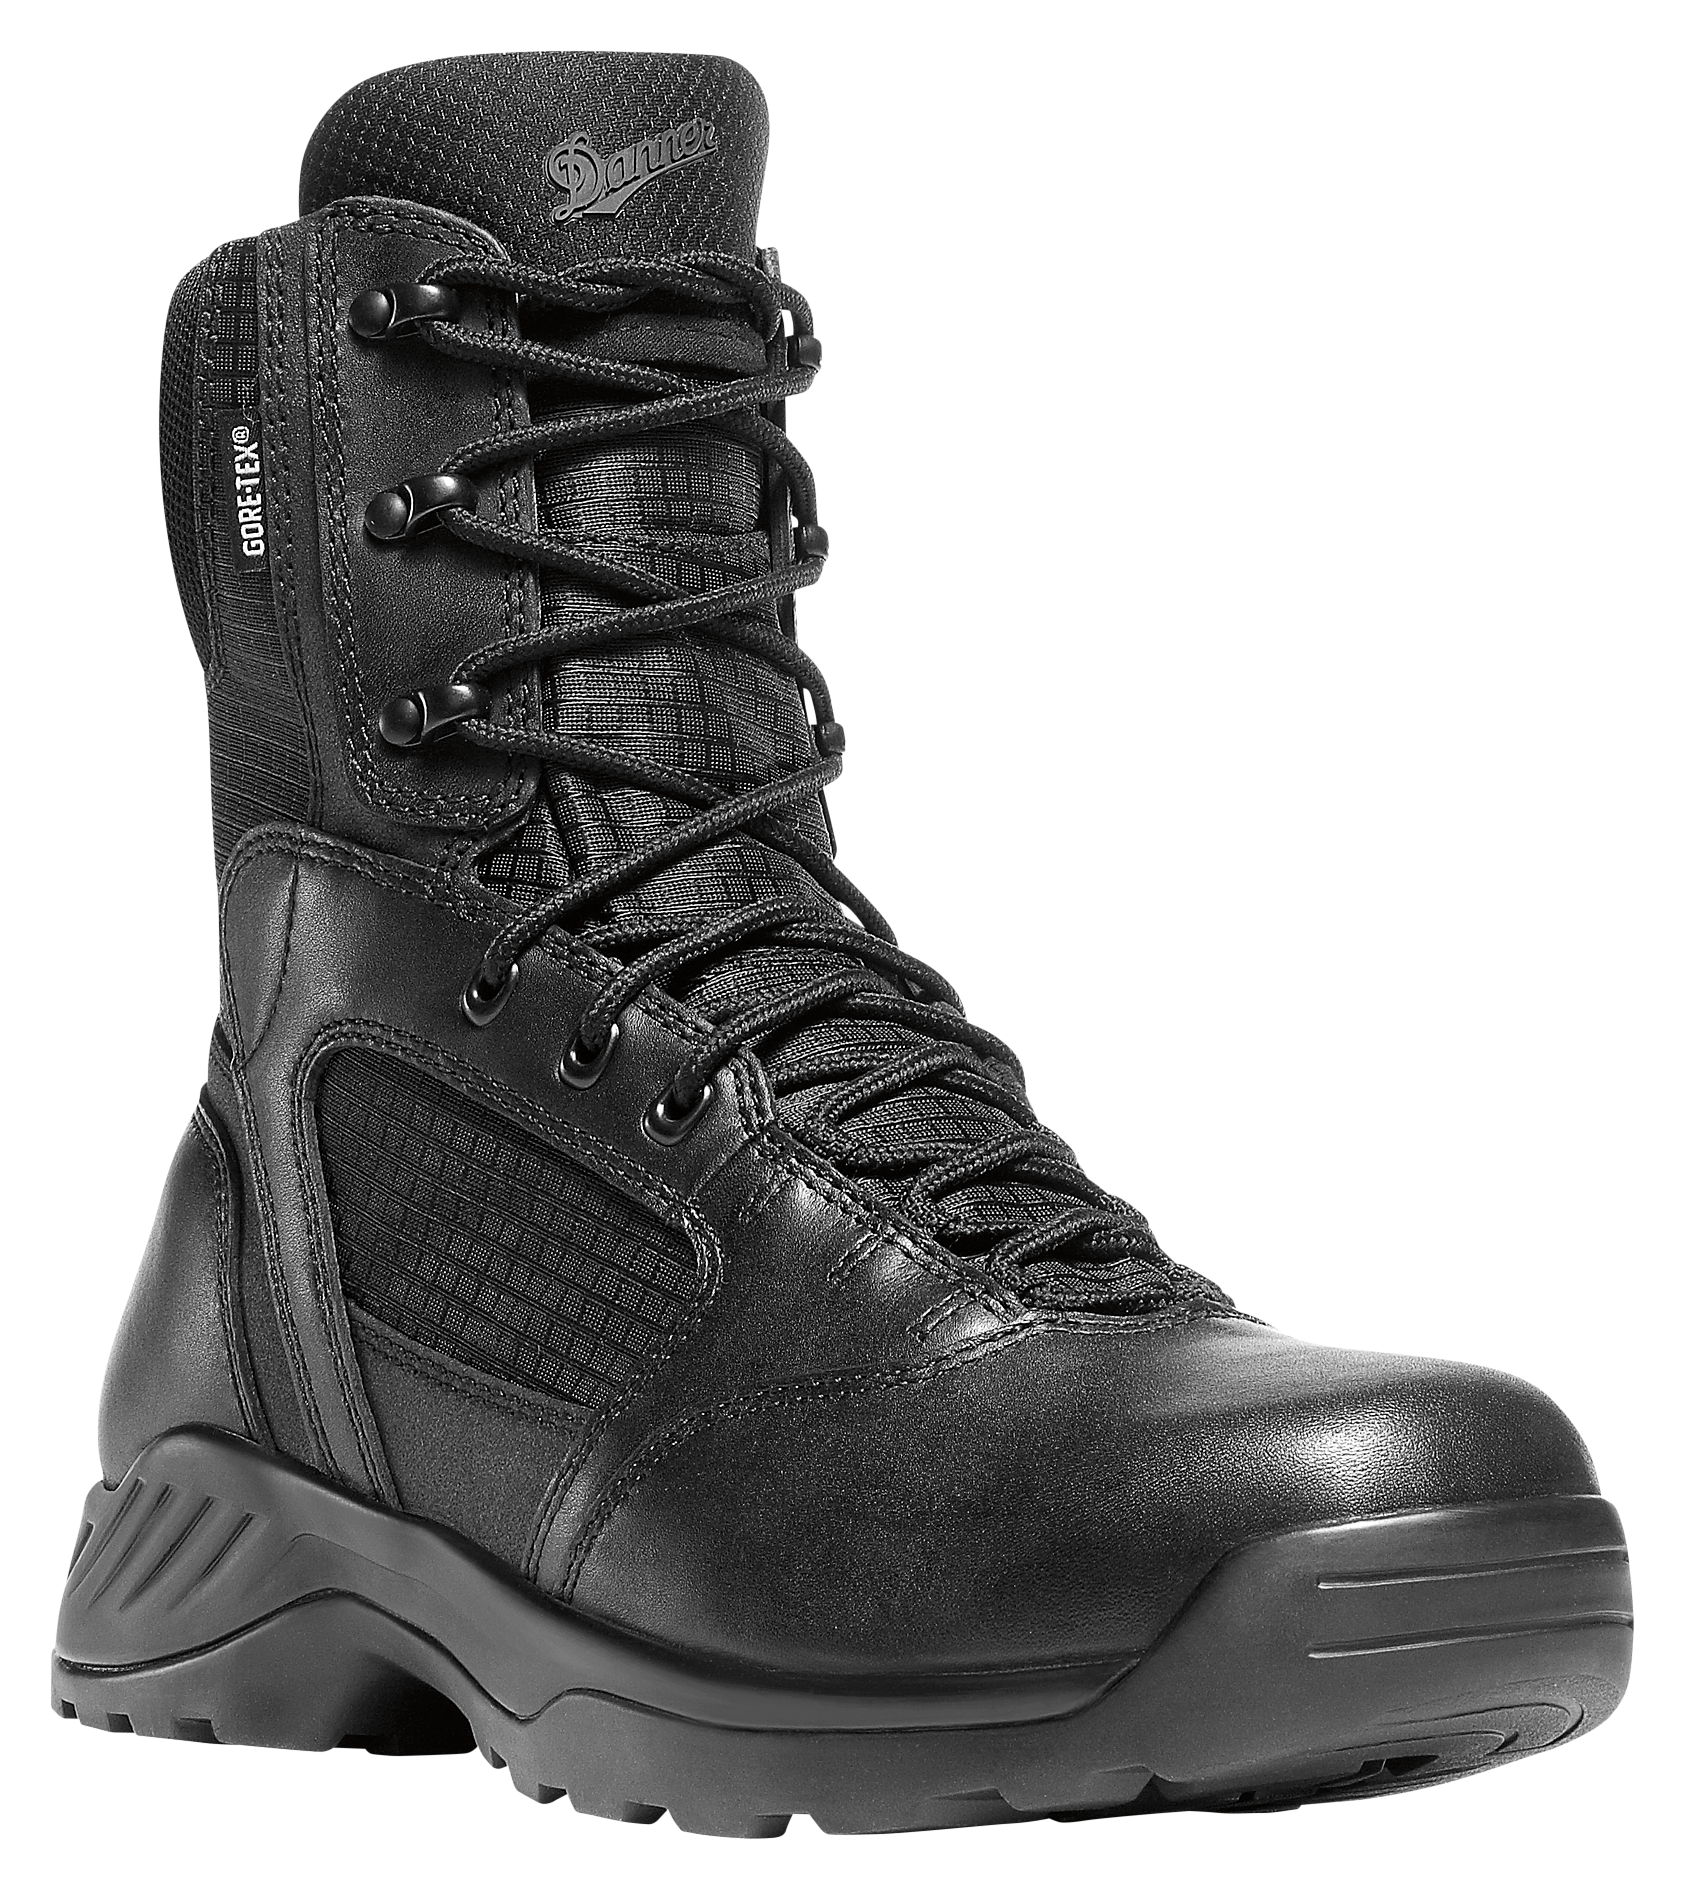 Danner Kinetic GTX Side-Zip Waterproof Tactical Duty Boots for Men - Black - 9.5M